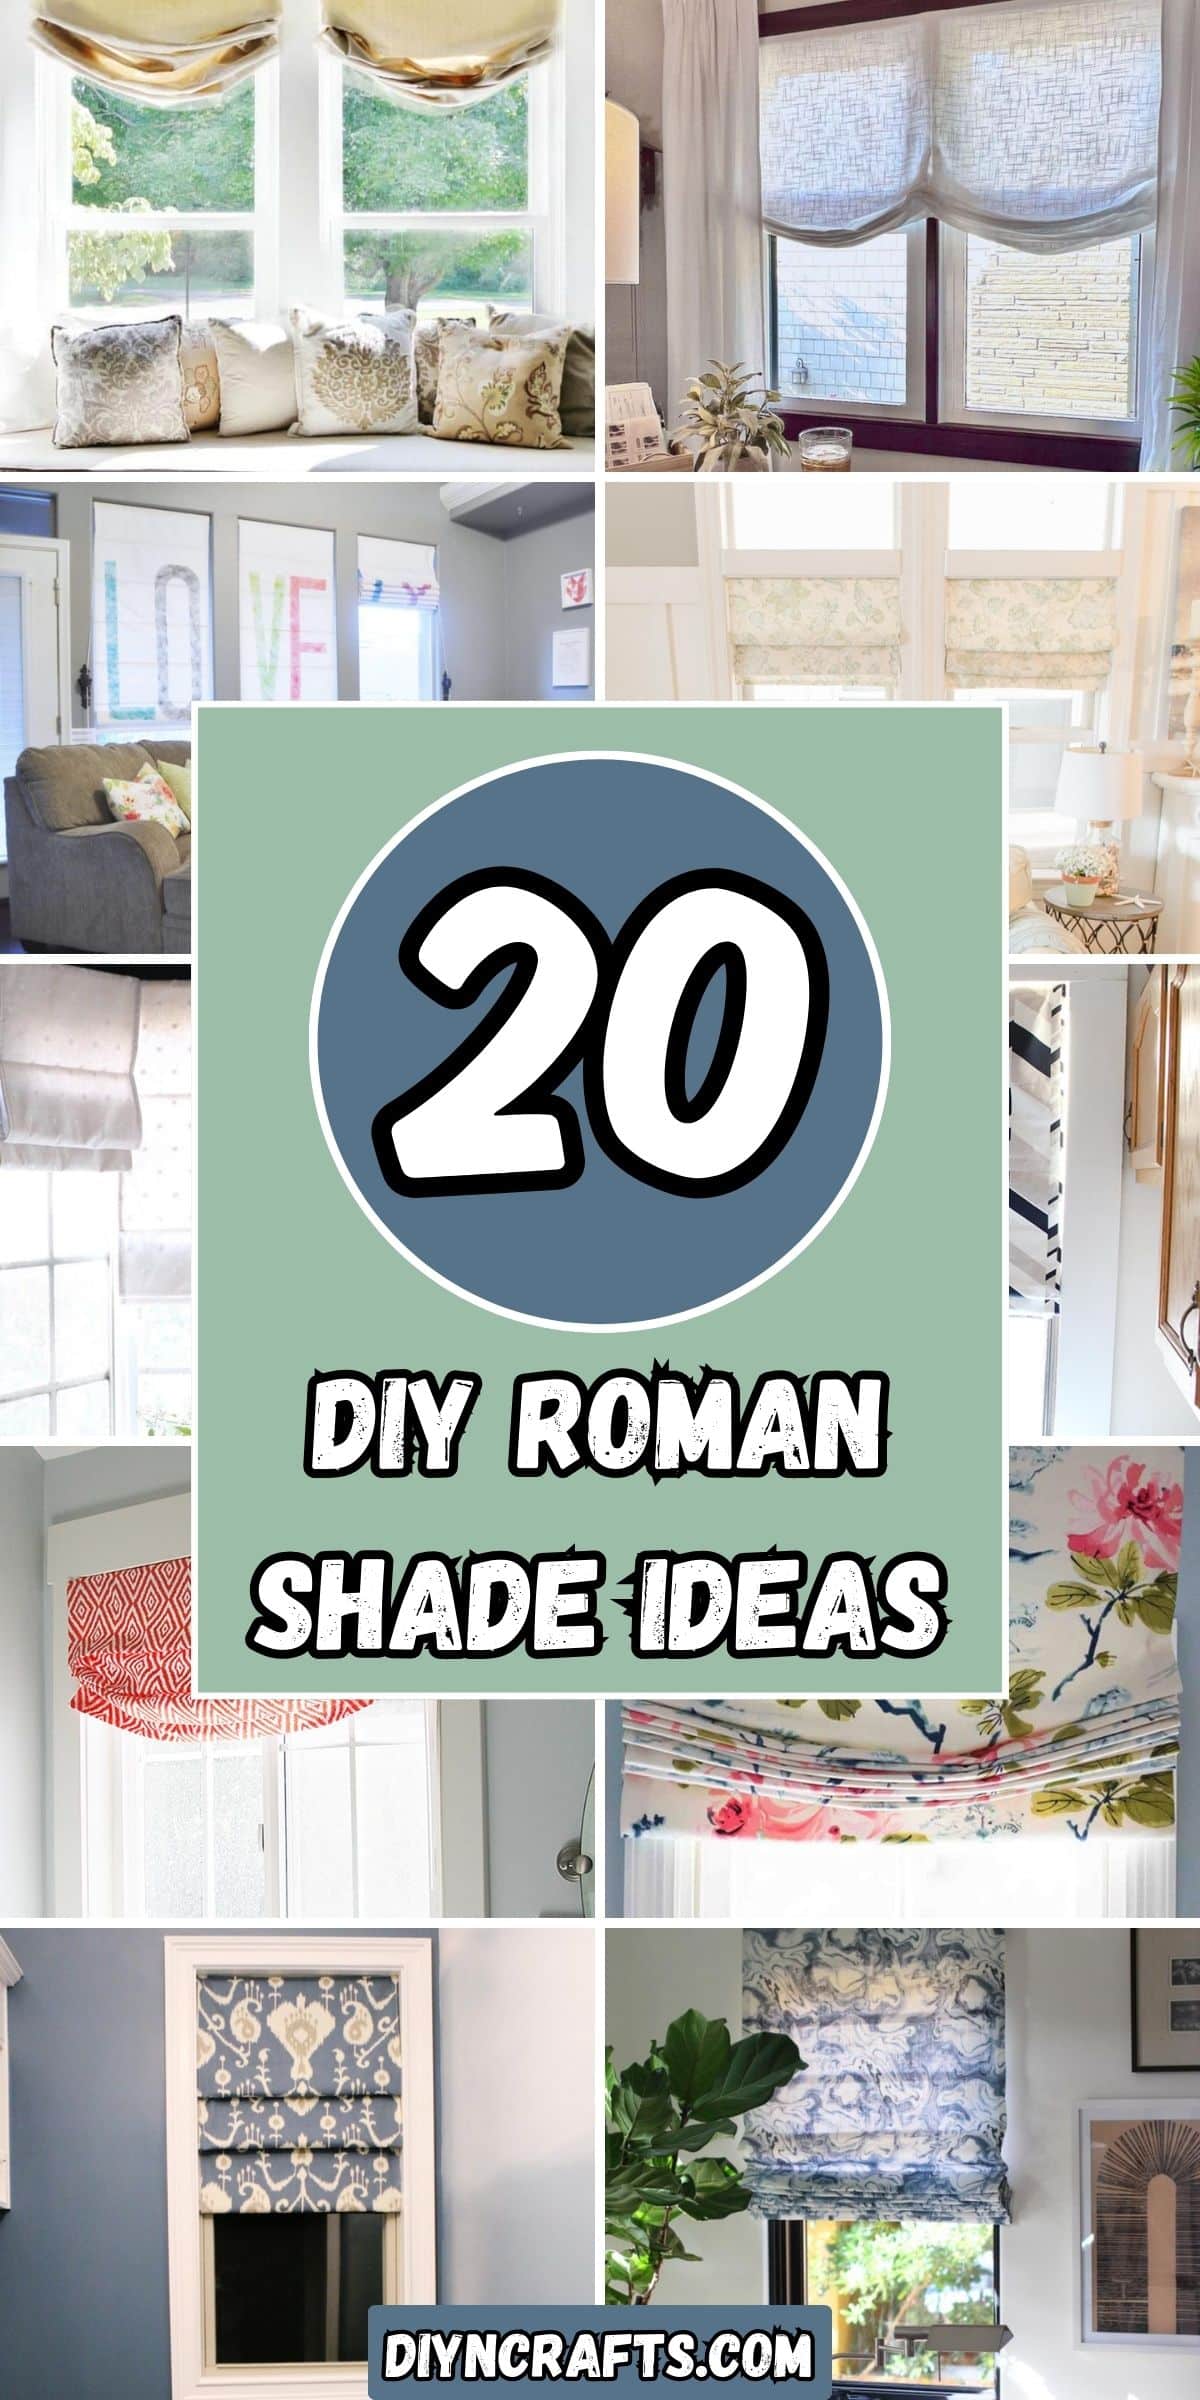 20 DIY Roman Shade Ideas collage.